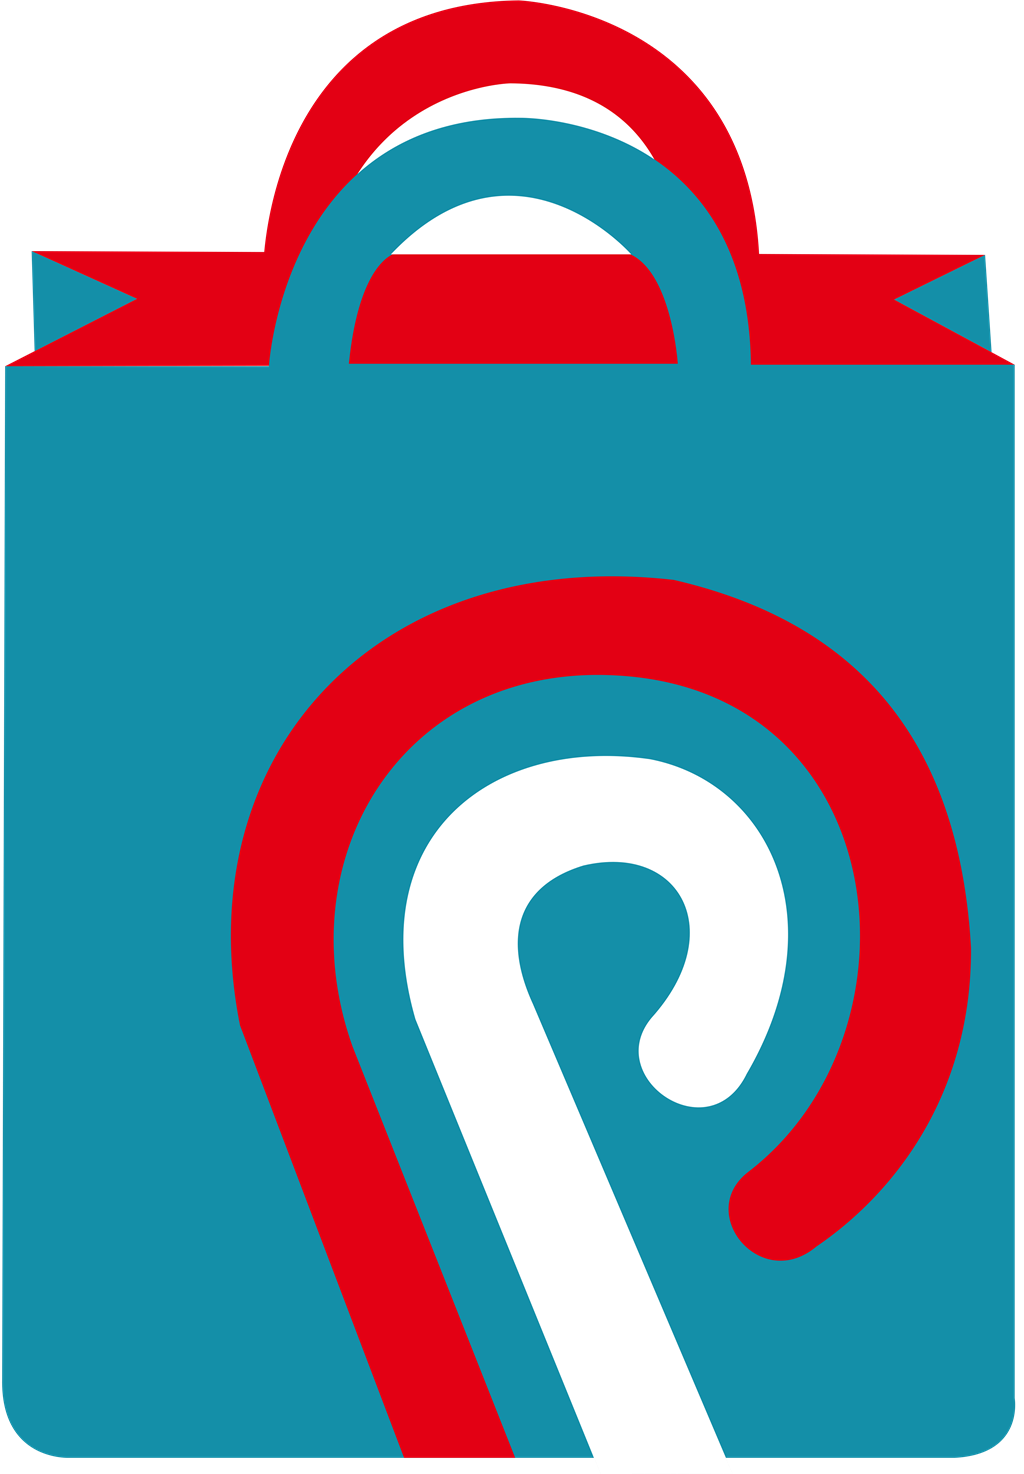 Primark logotype, transparent .png, medium, large